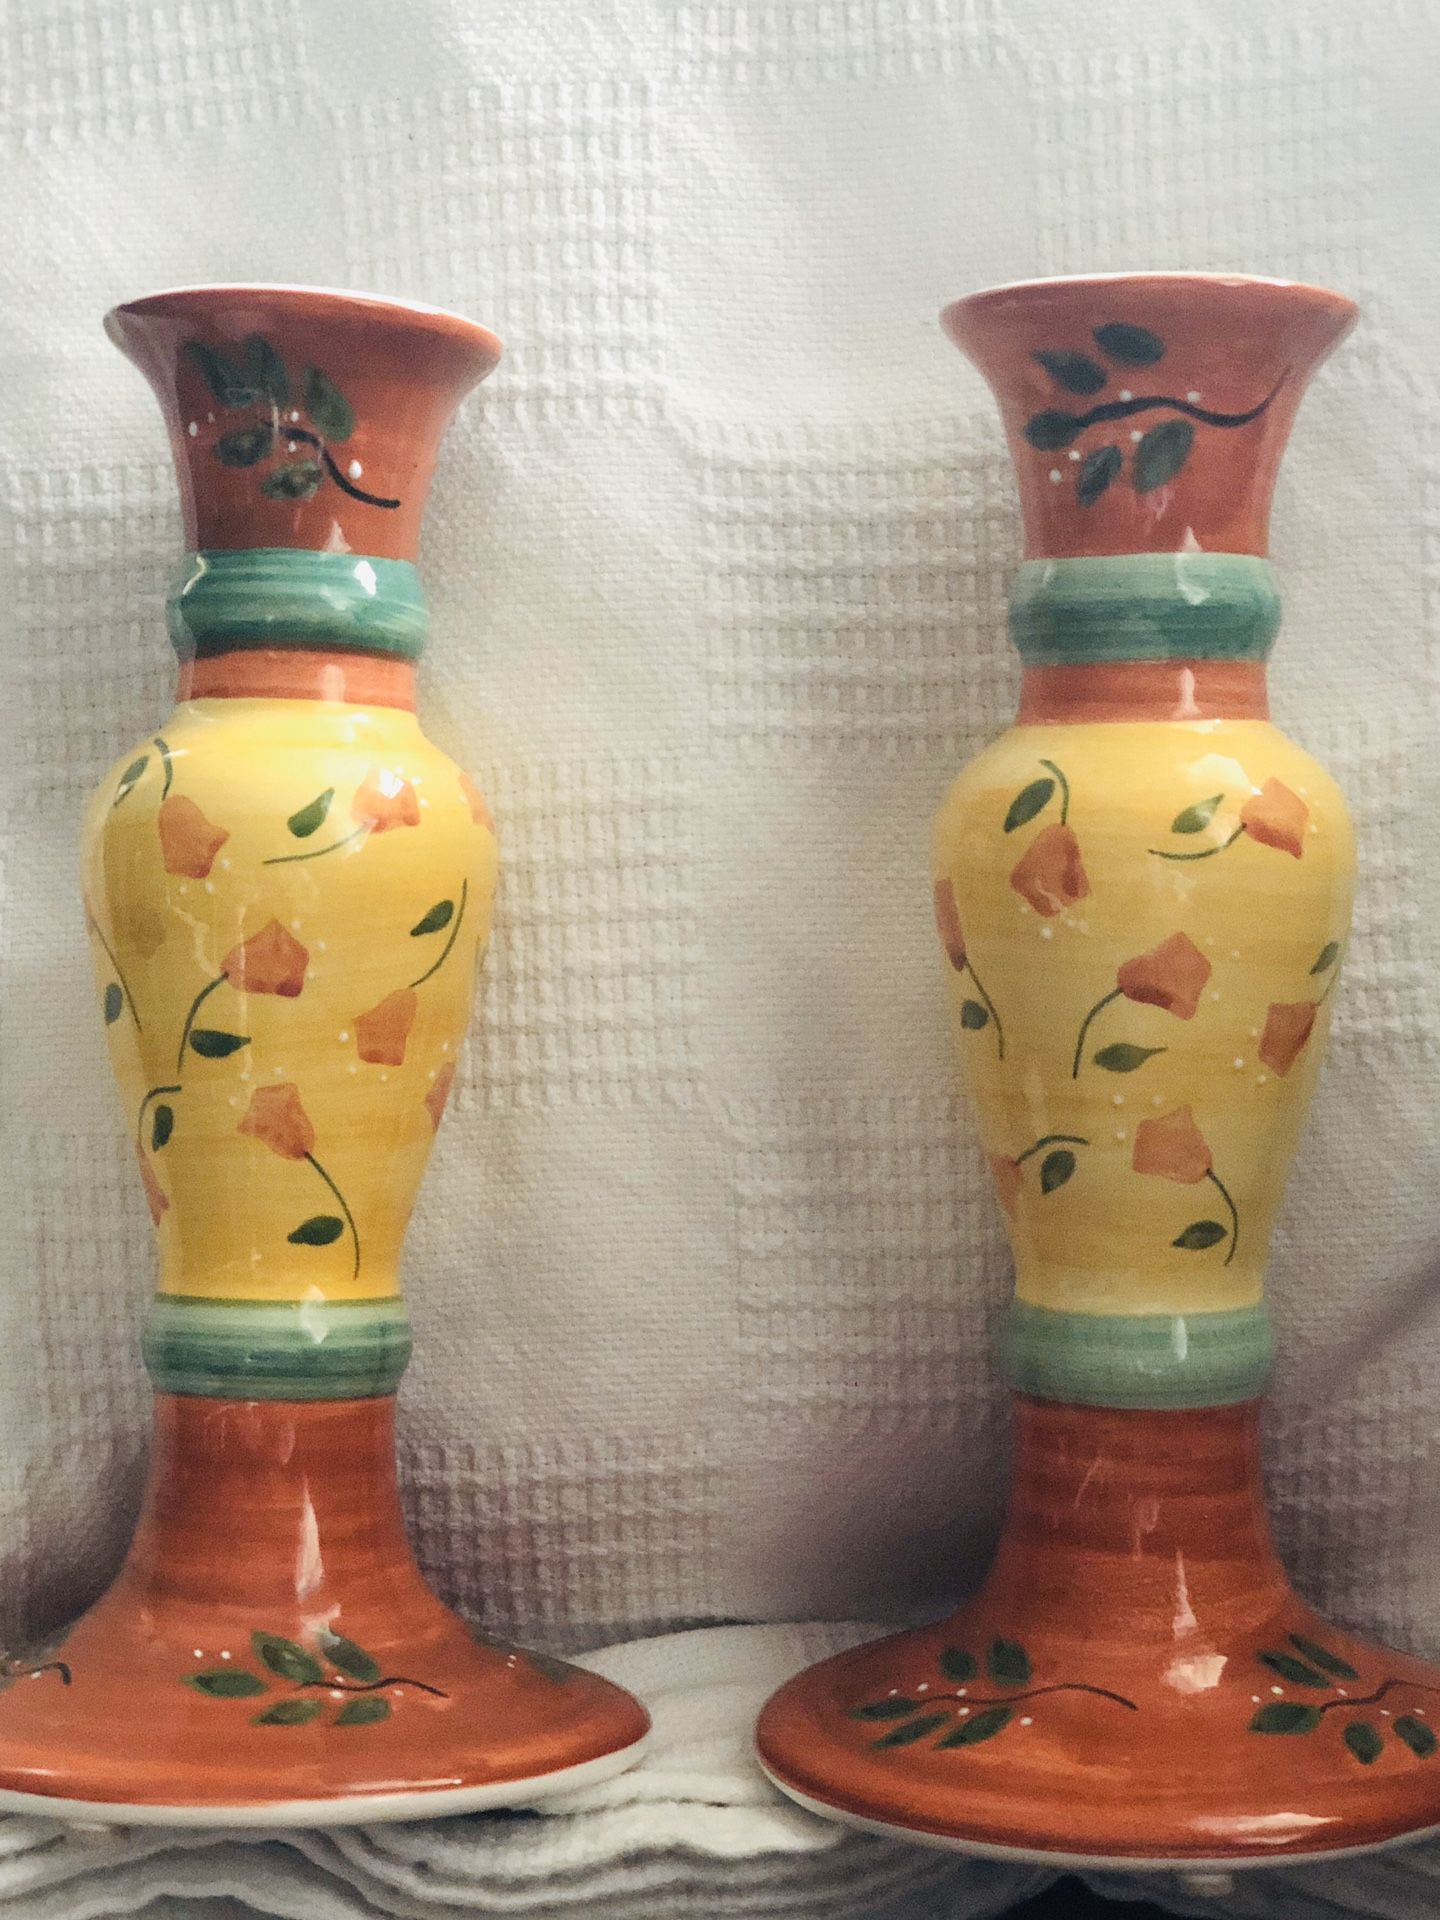 Beautiful ceramic candle holders